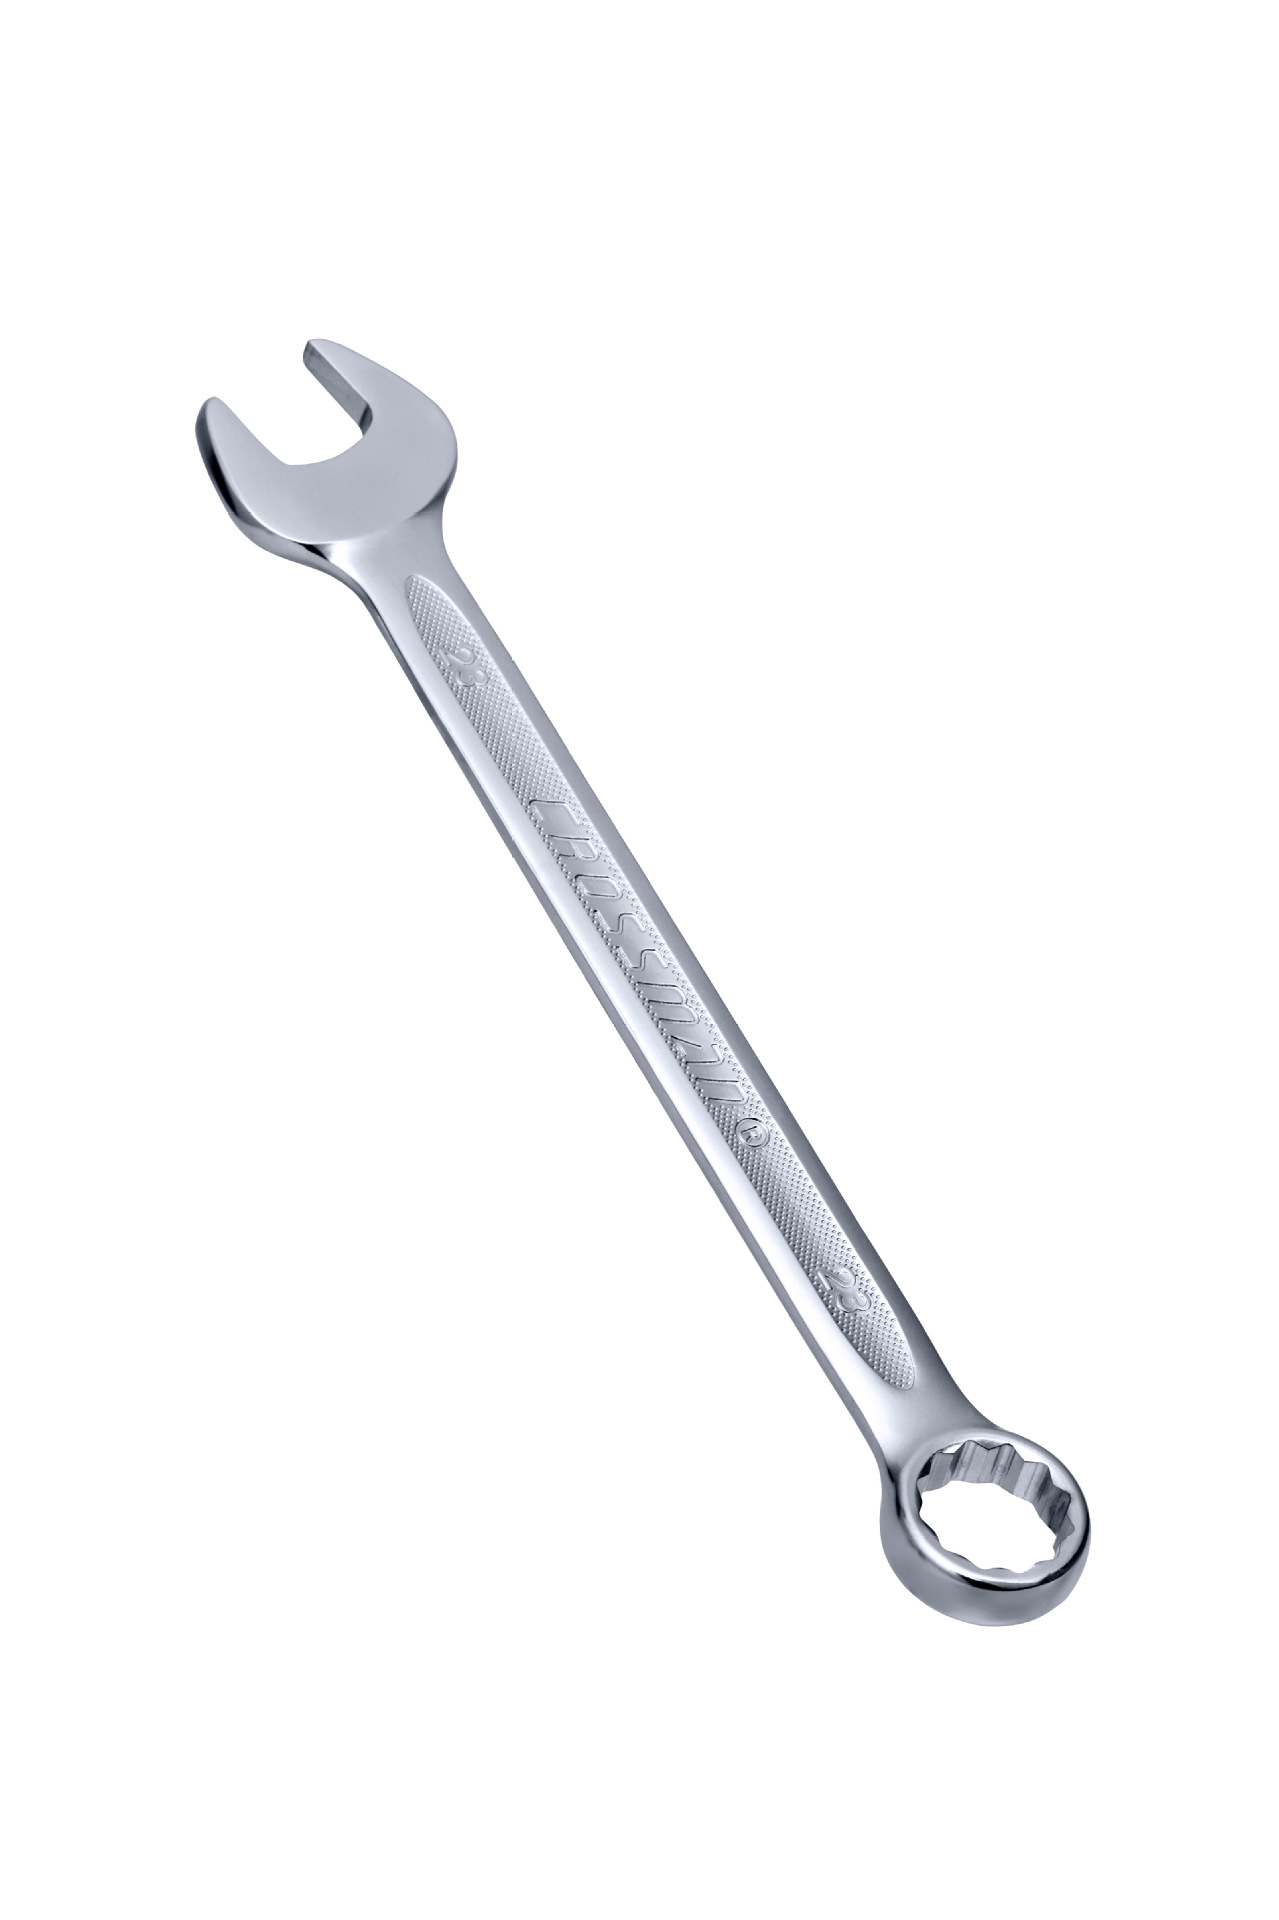 the ProFlex Precision Wrench (1)